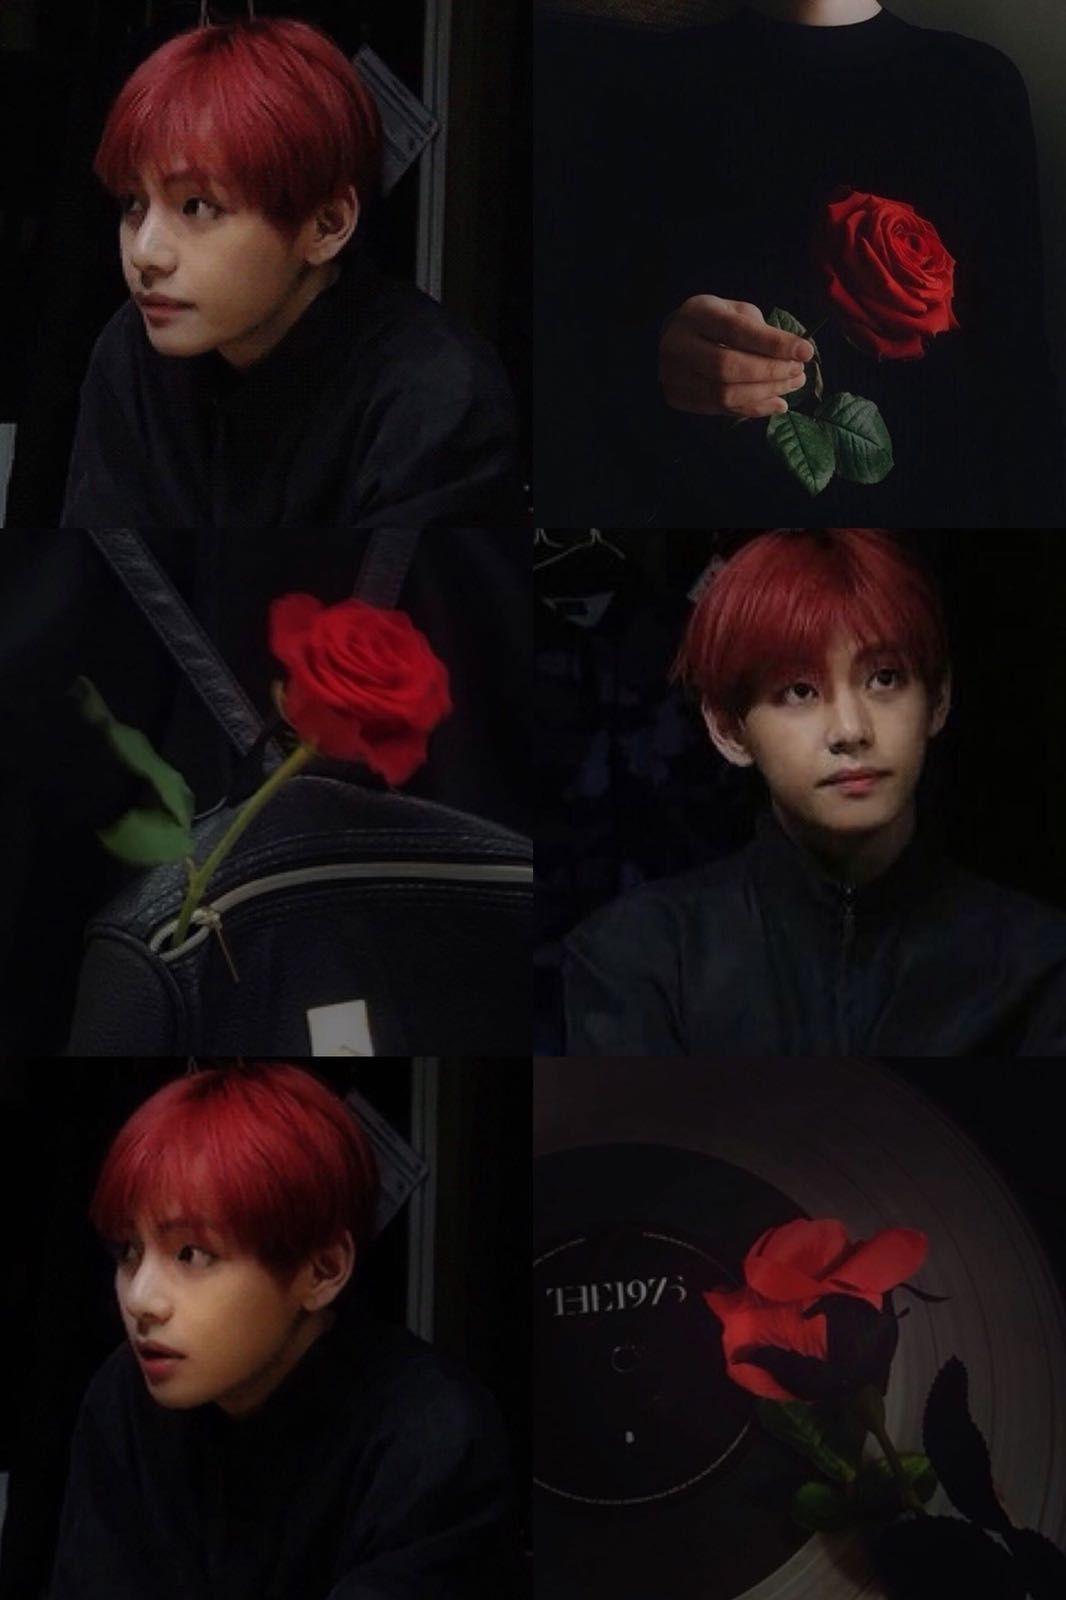 BTS V Taehyung aesthetic theme black + red roses. Bts